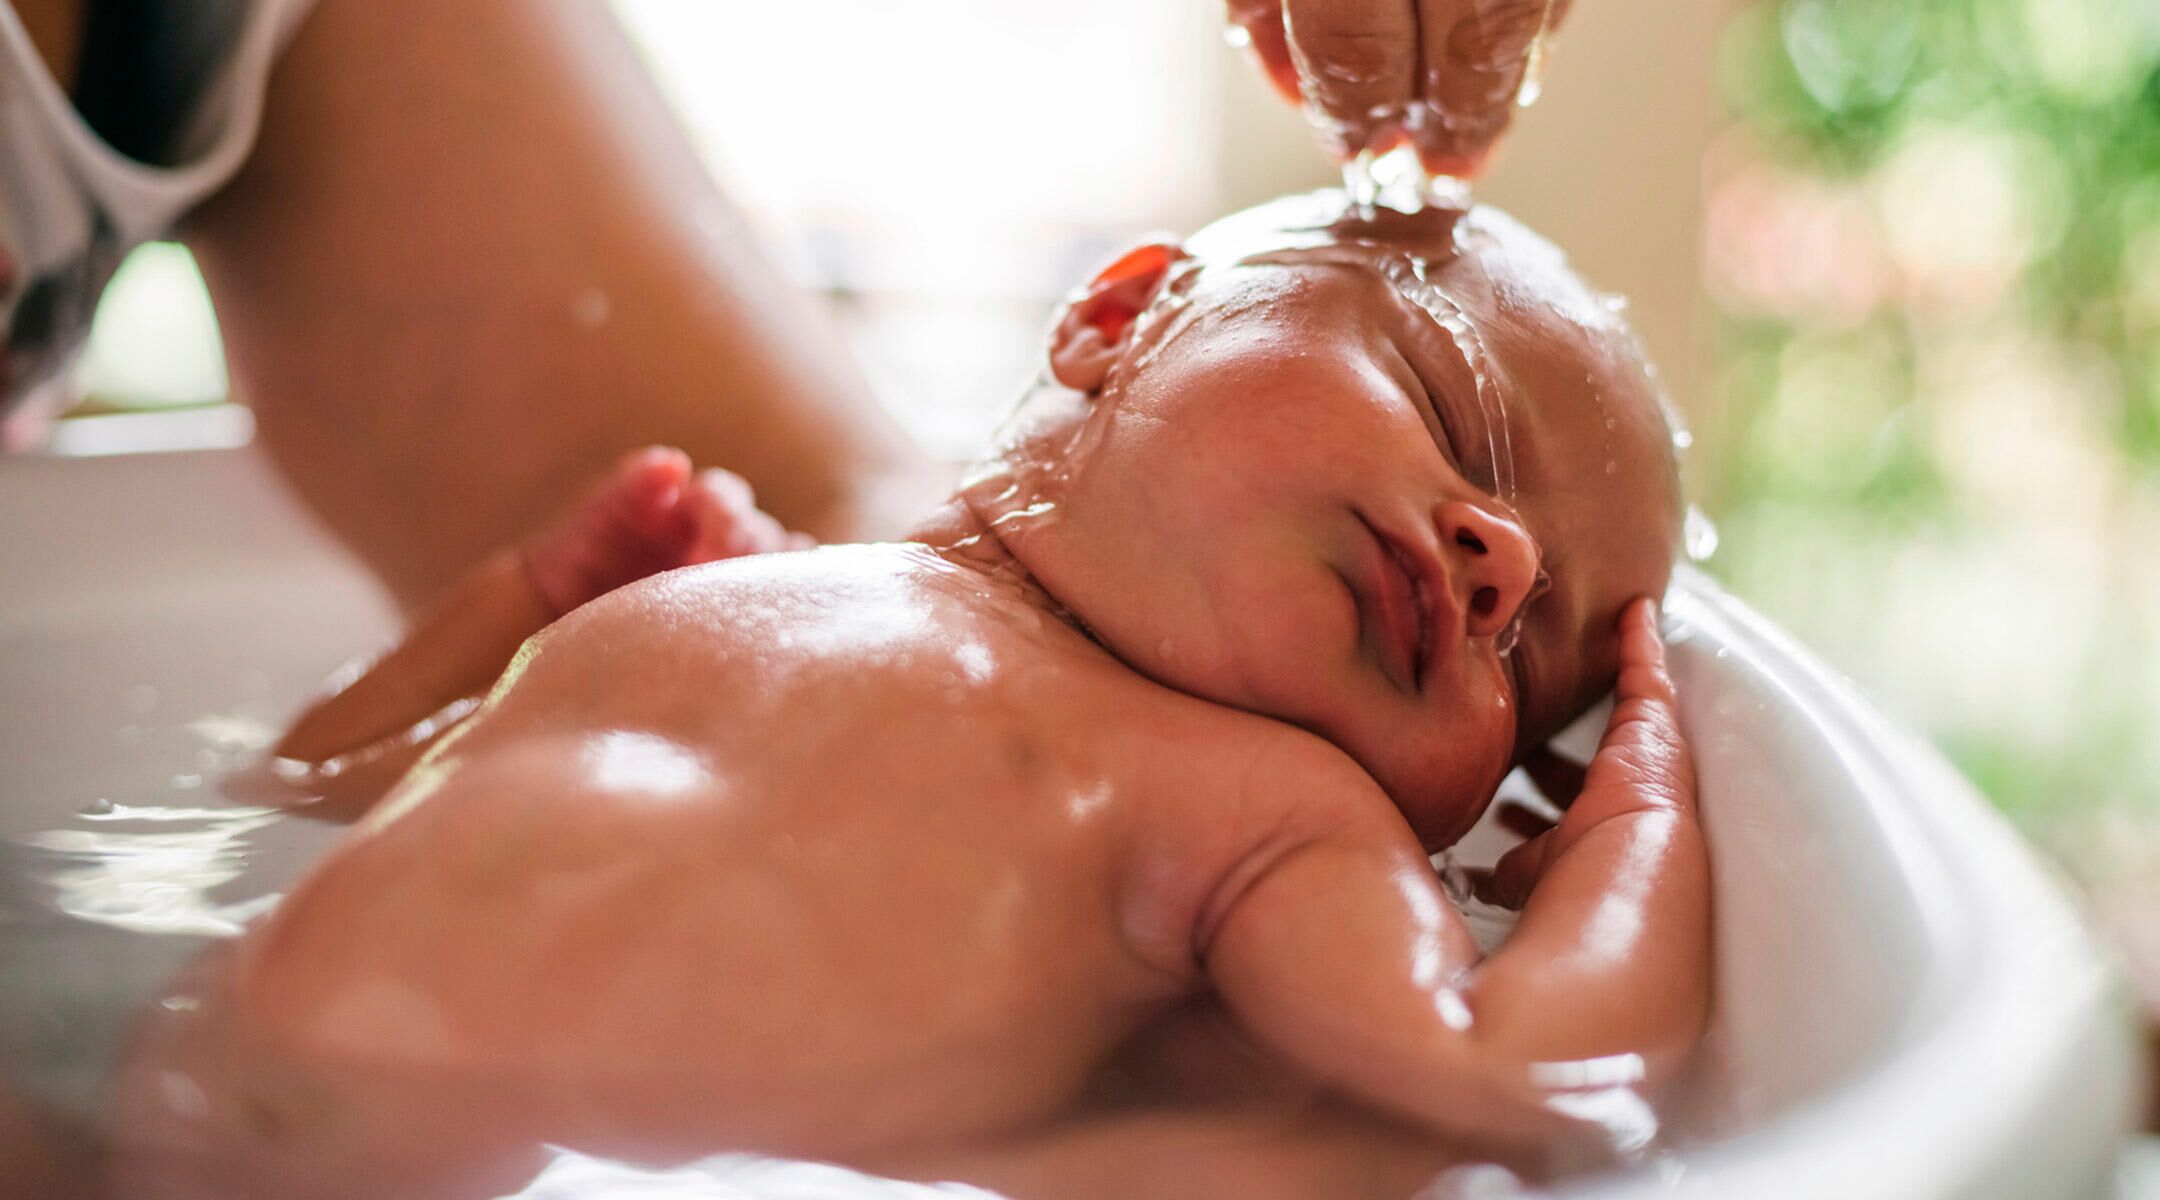 Baby Bath Seat Safety, Safety 1st Bathtub Seat Recall